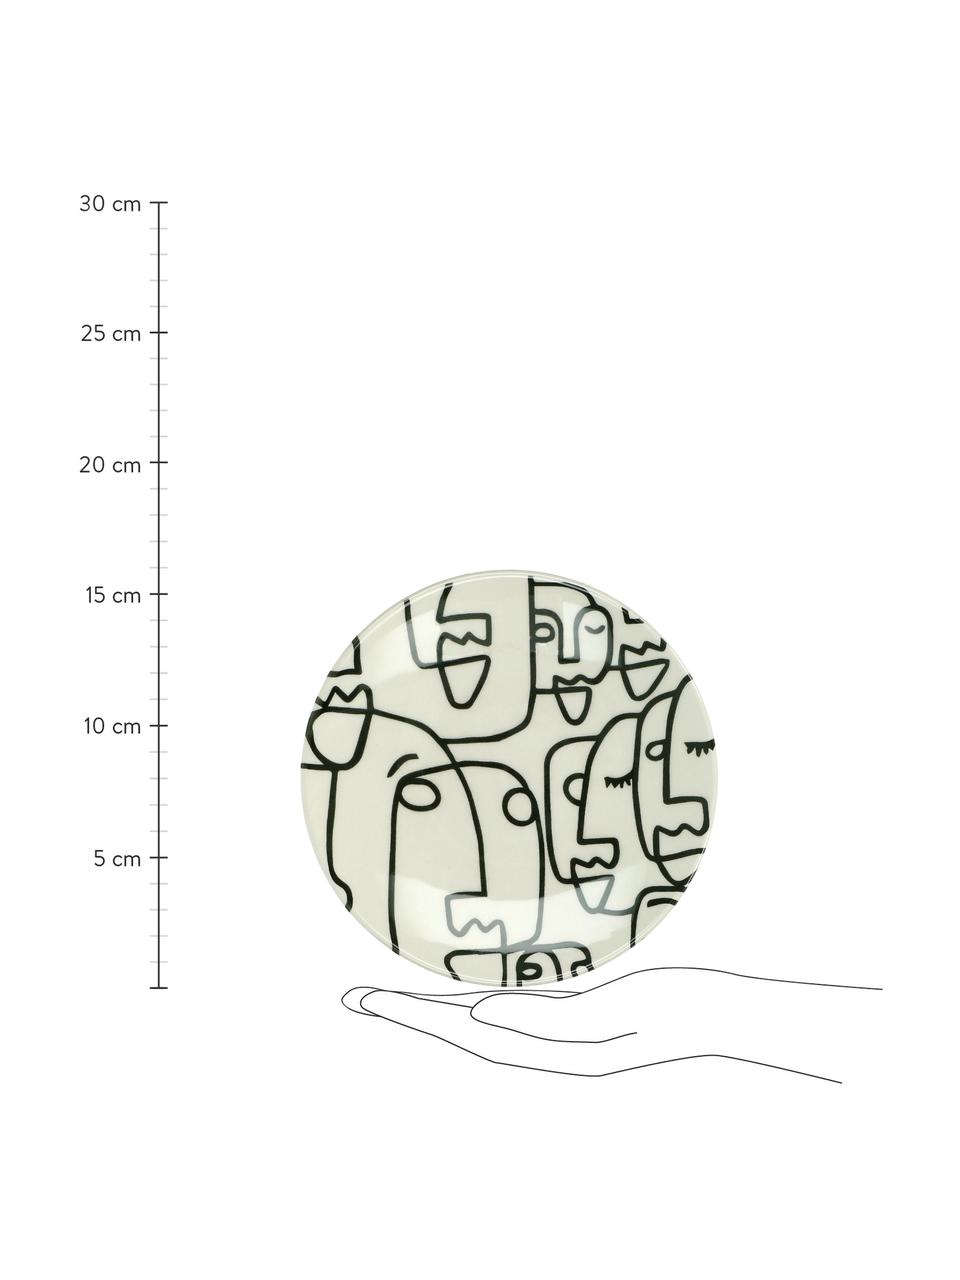 Platos postre Modiglia, 2 uds., Gres, Blanco crema, negro, Ø 16 cm